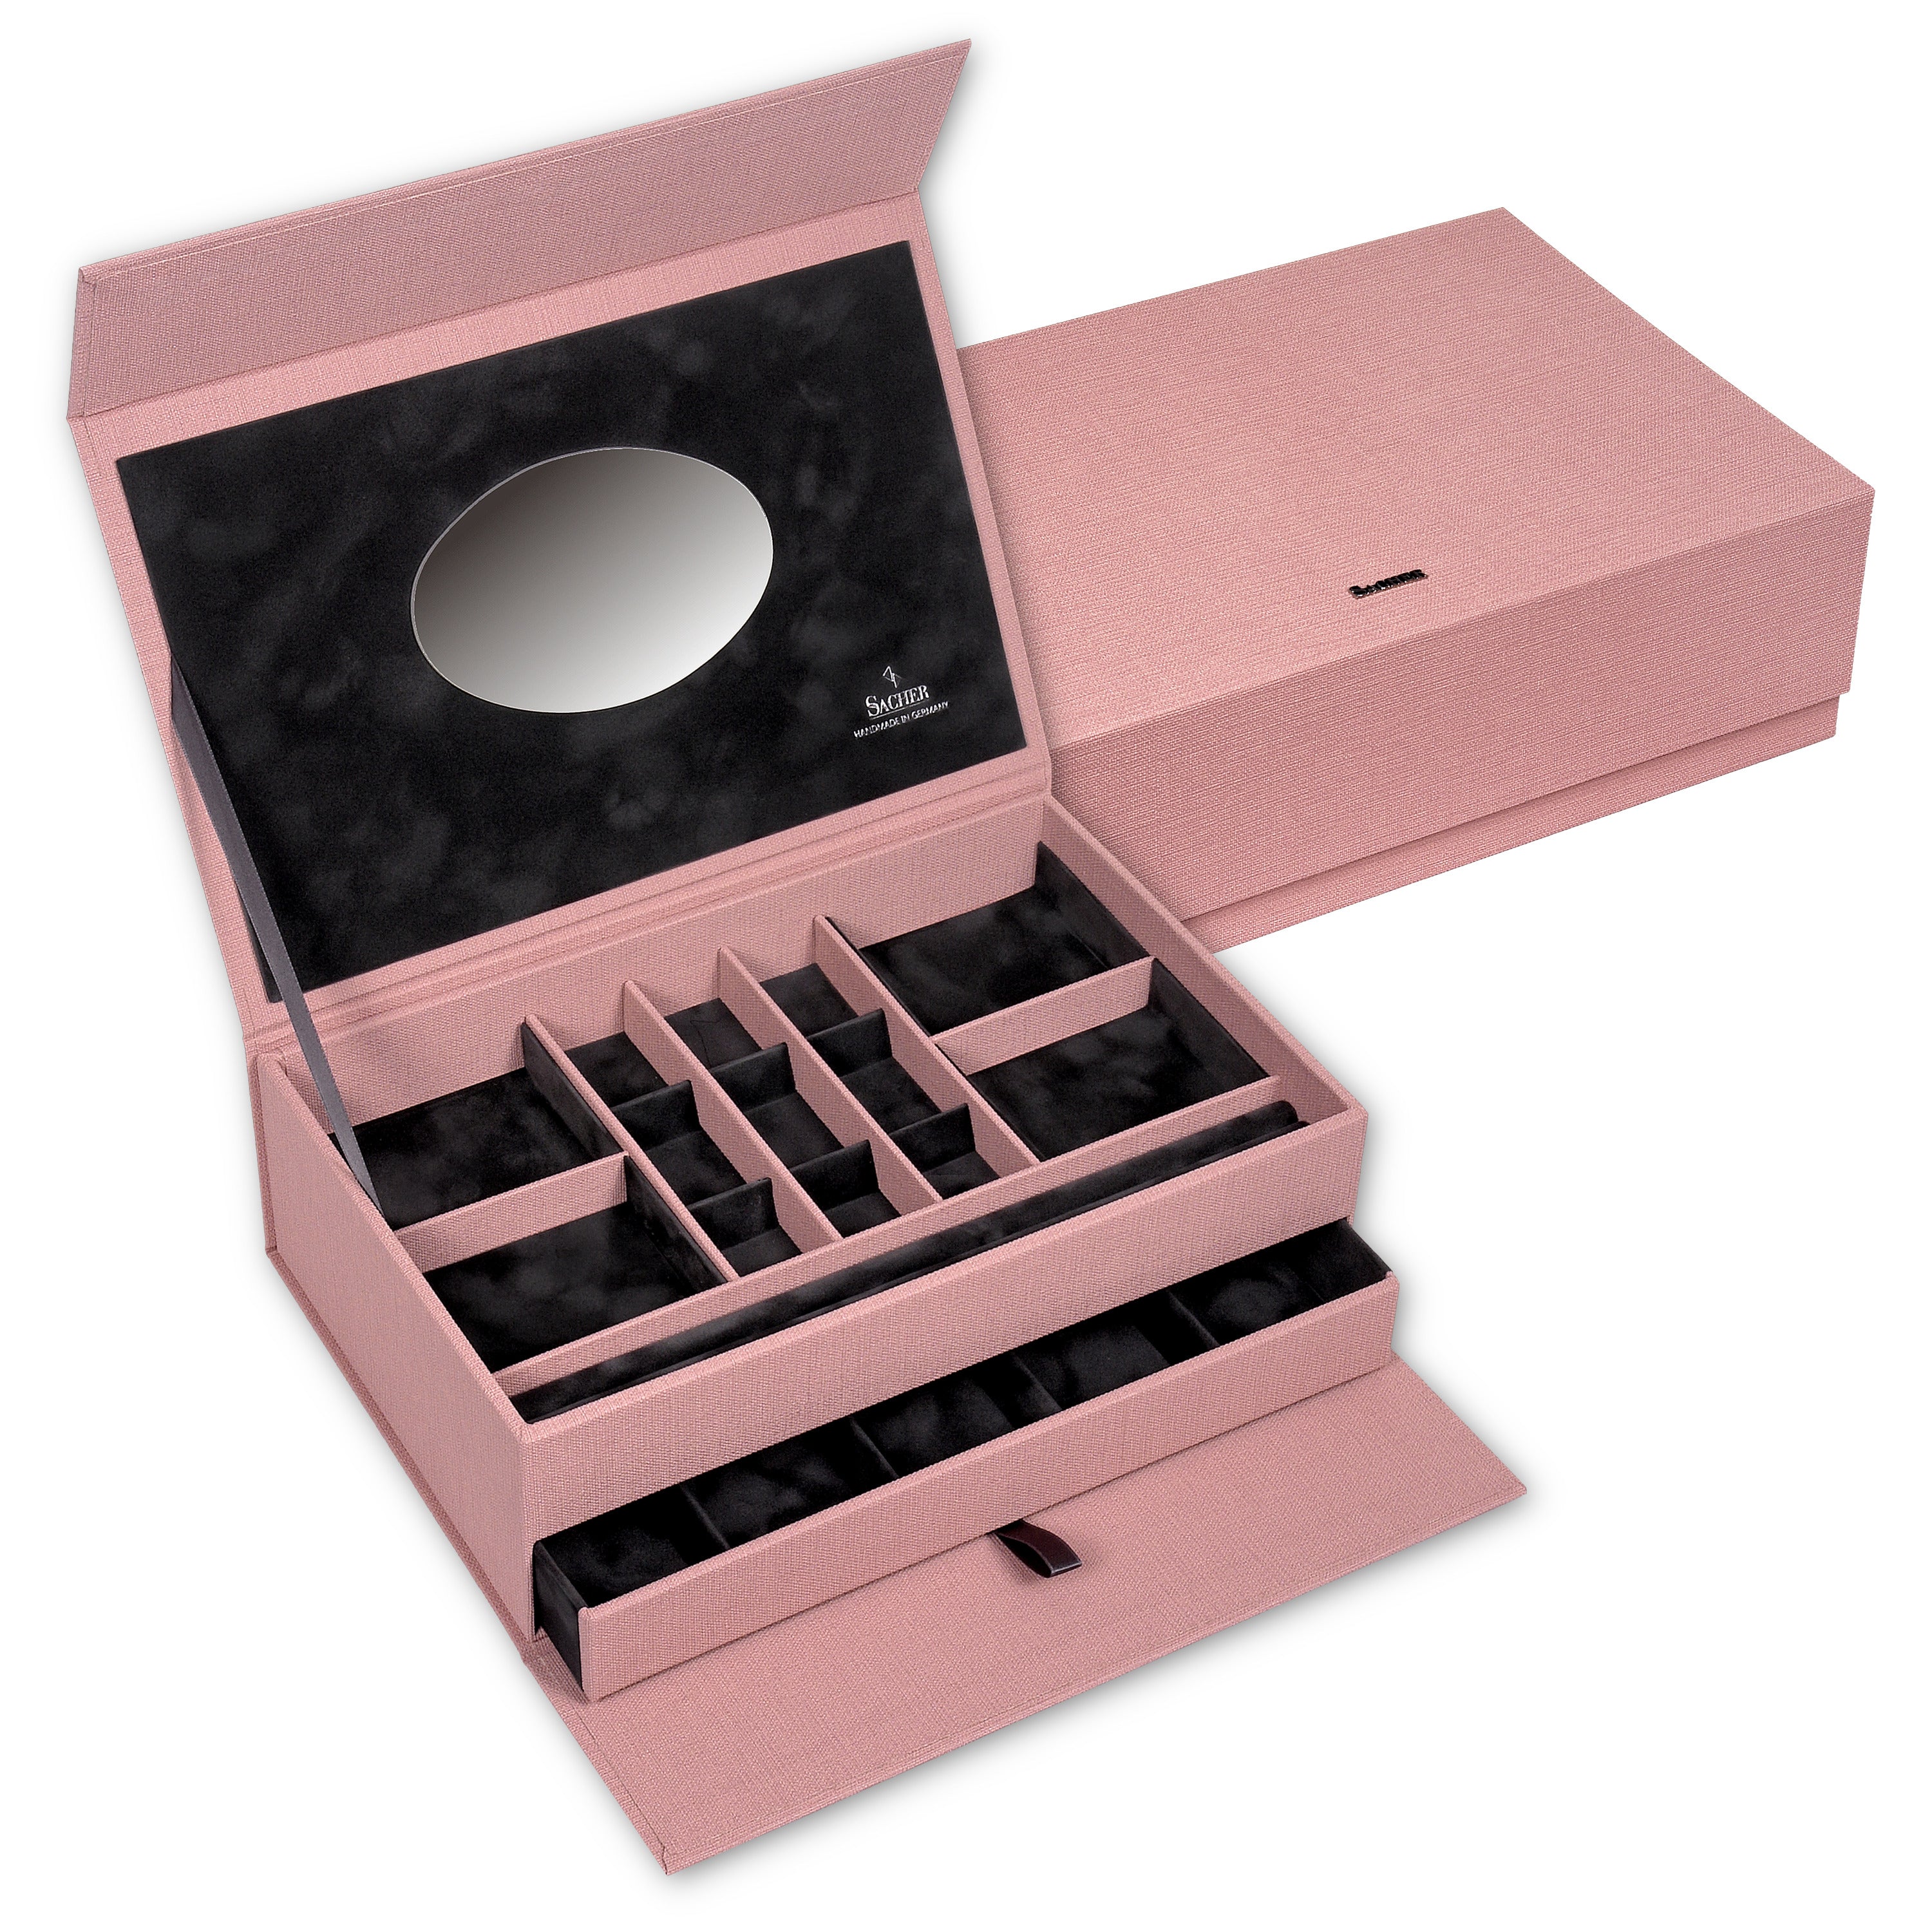 Schmuckbox pastello / rosa Manufaktur 1846 – Store SACHER Offizieller 